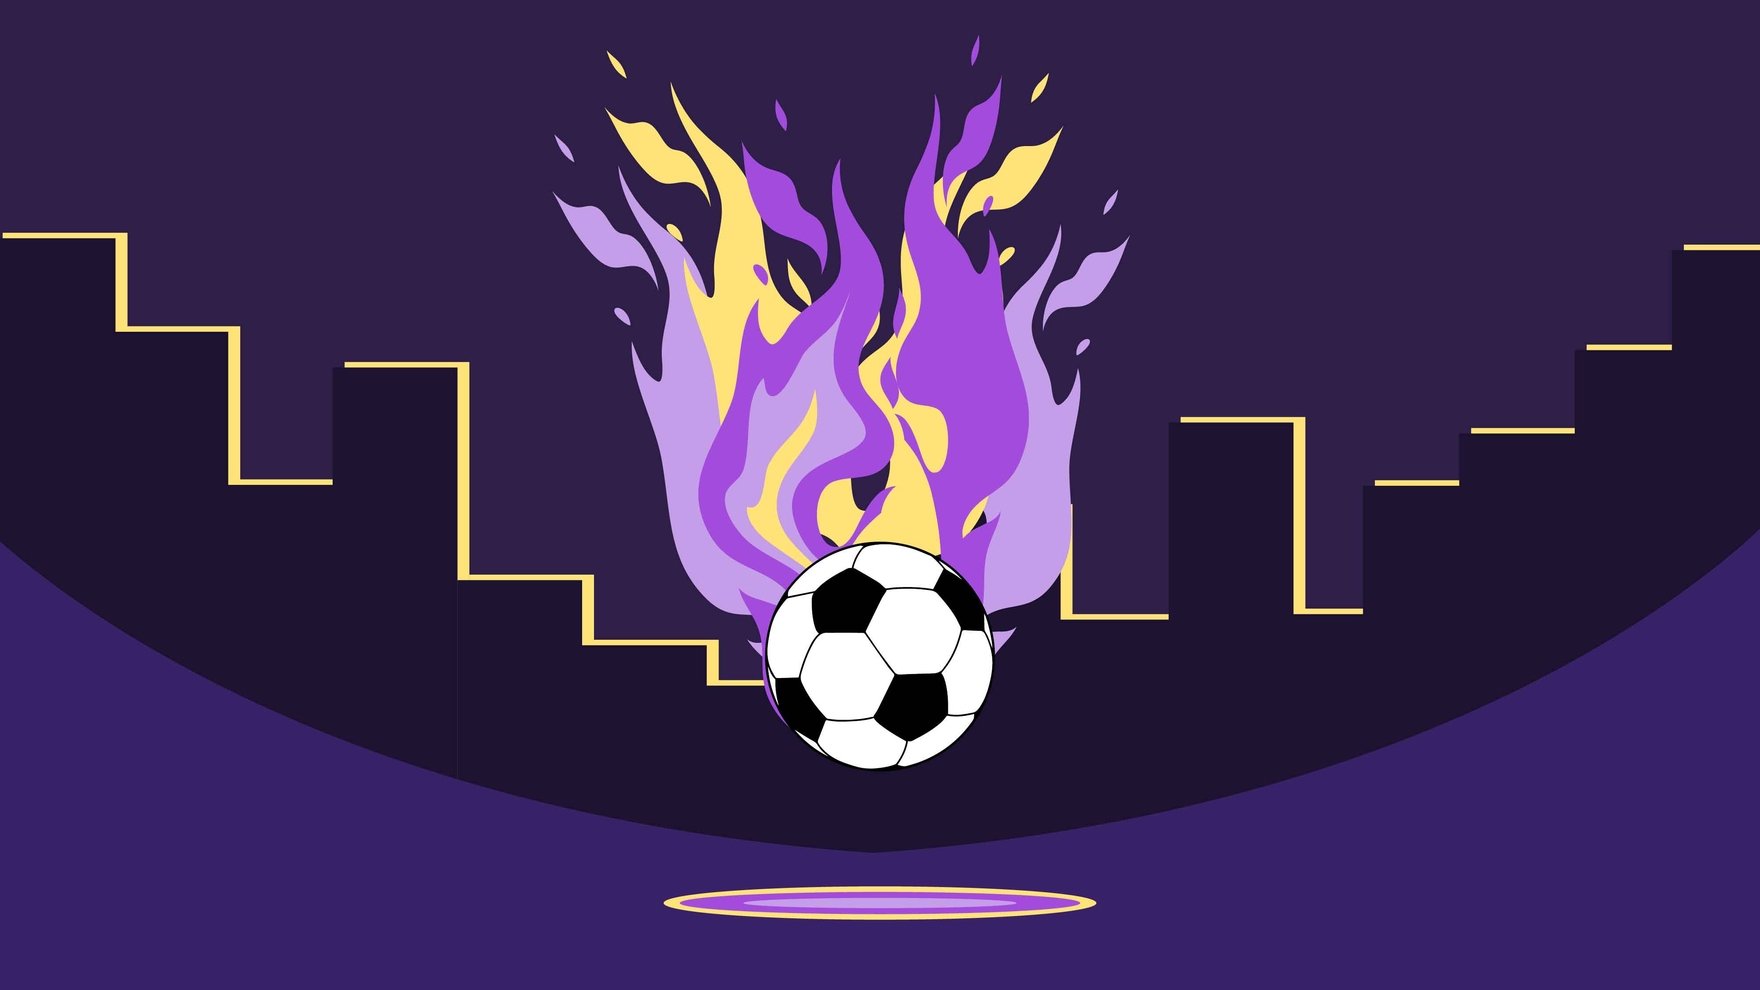 Fantasy Football Background in Illustrator, EPS, SVG, JPG, PNG